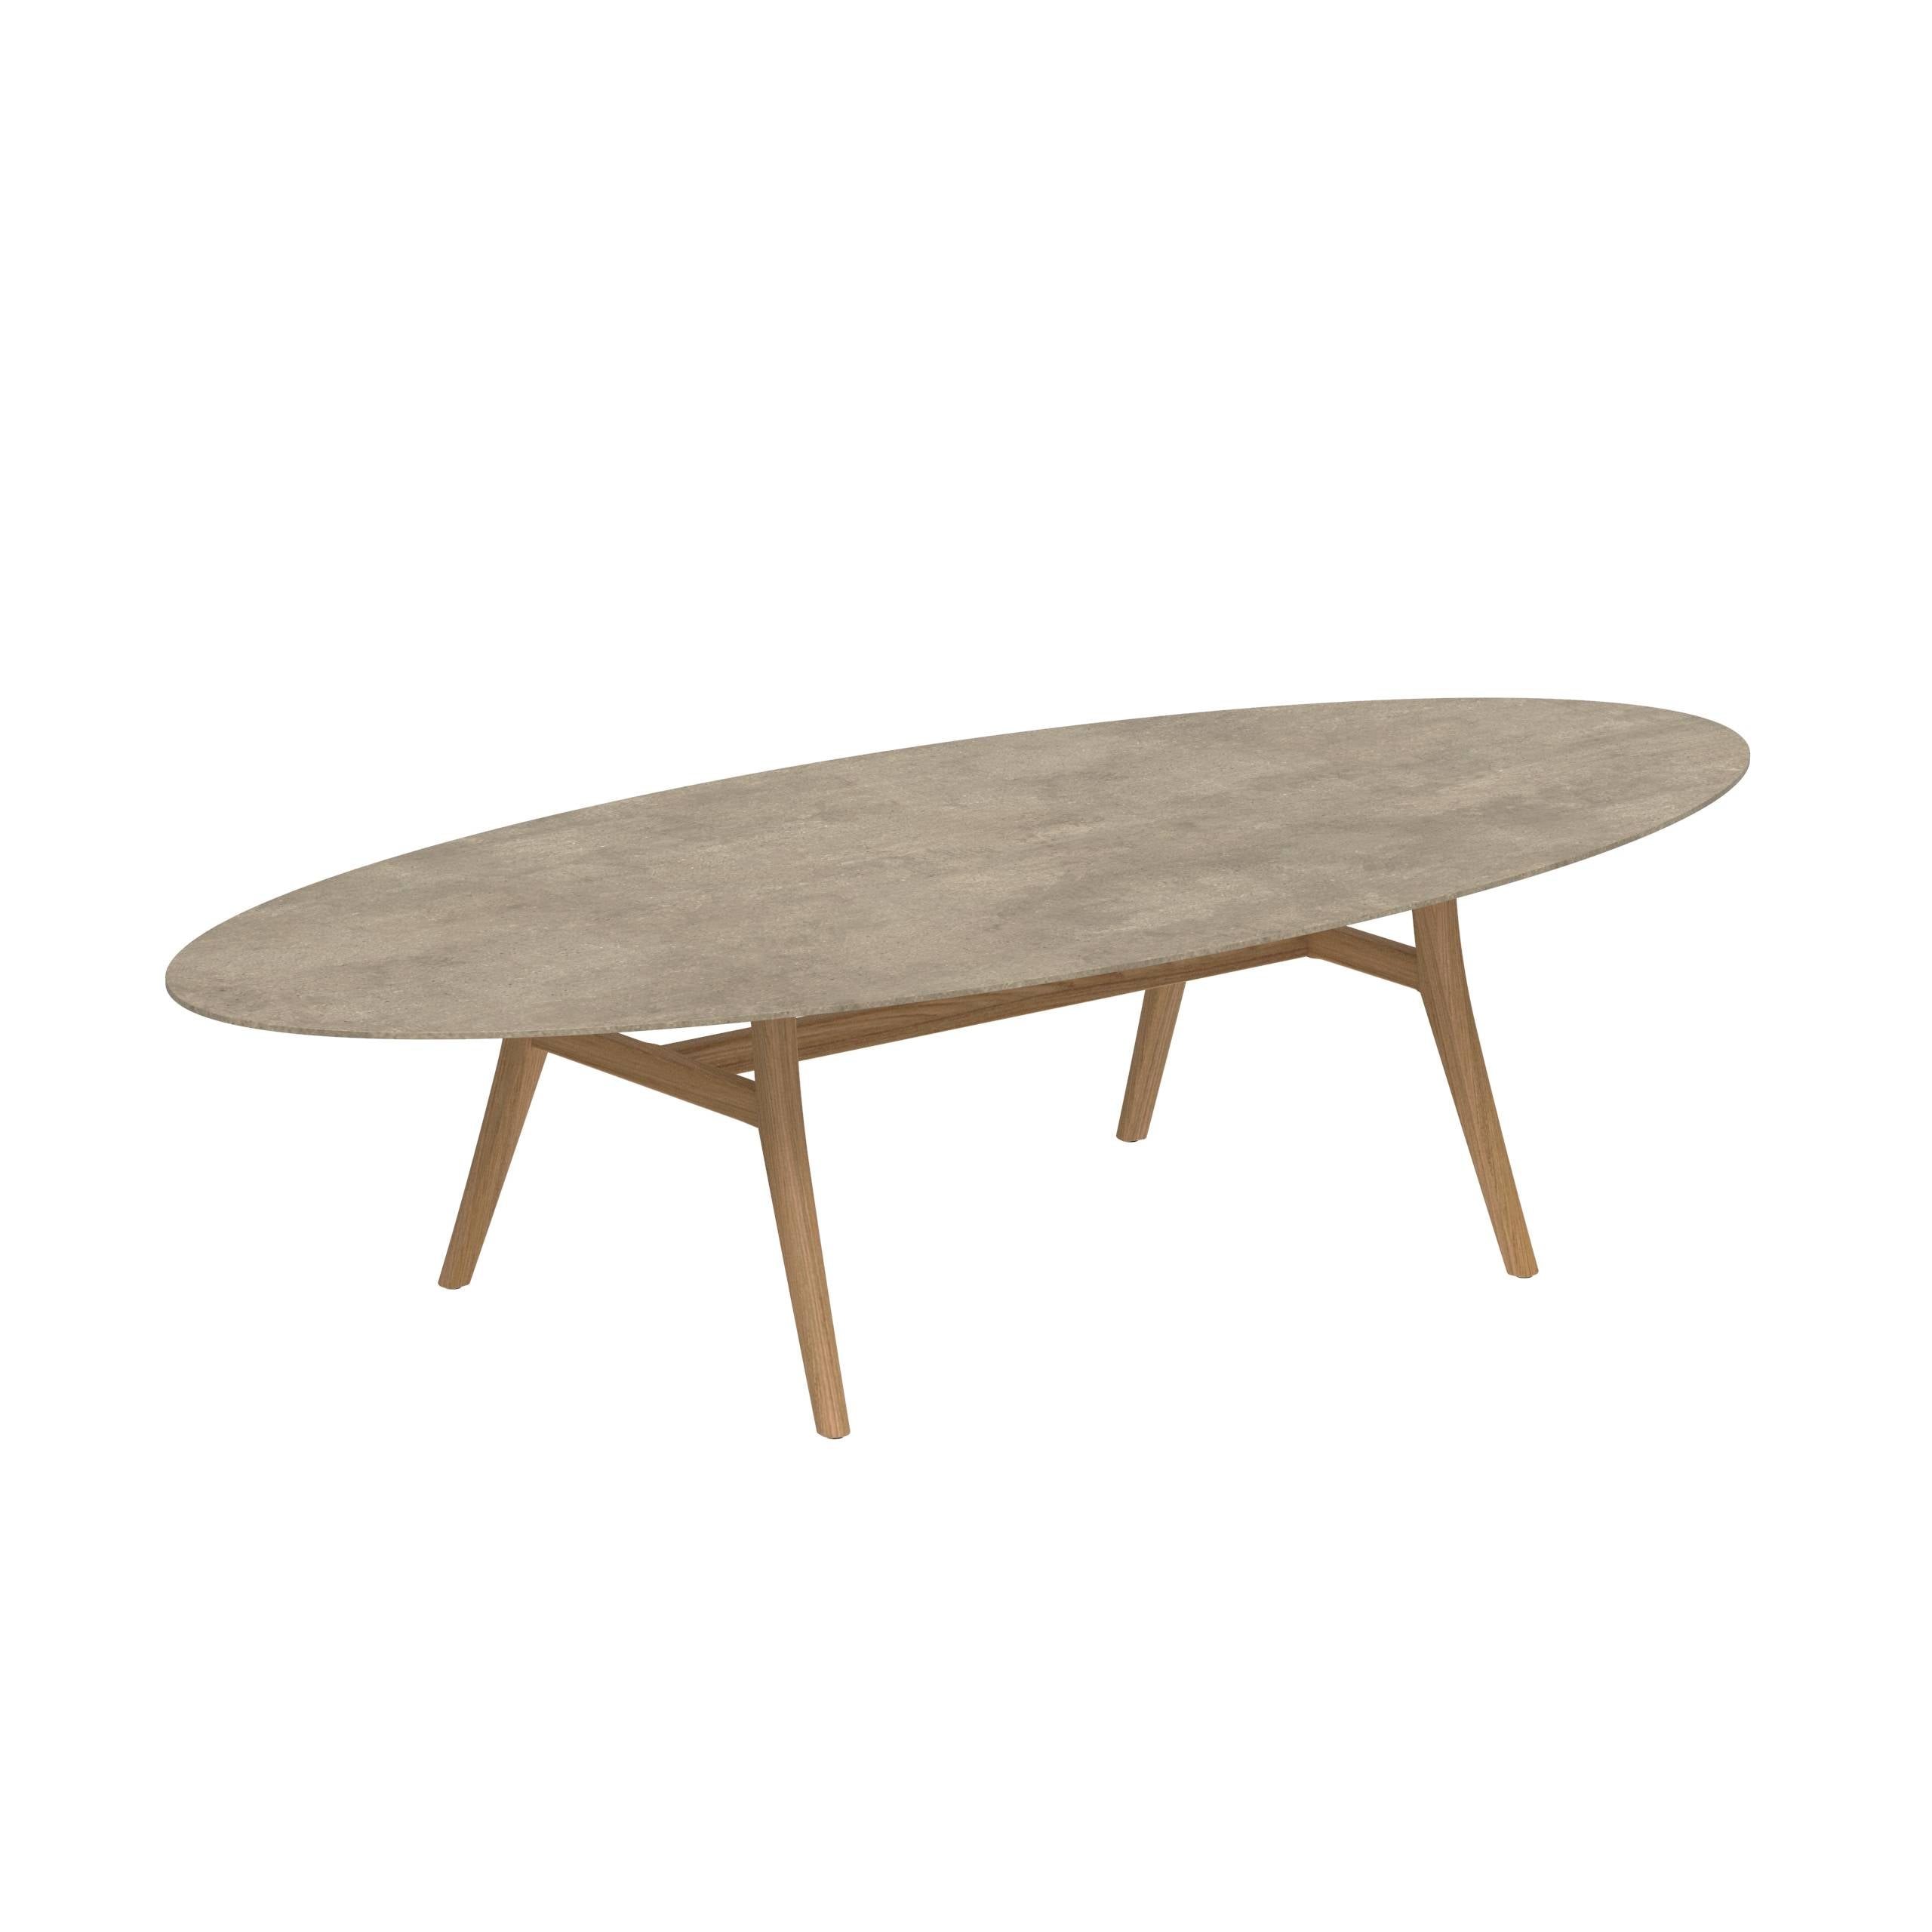 Zidiz Table 320x140cm Teak Legs - Table Top Ceramic Terra Sabbia